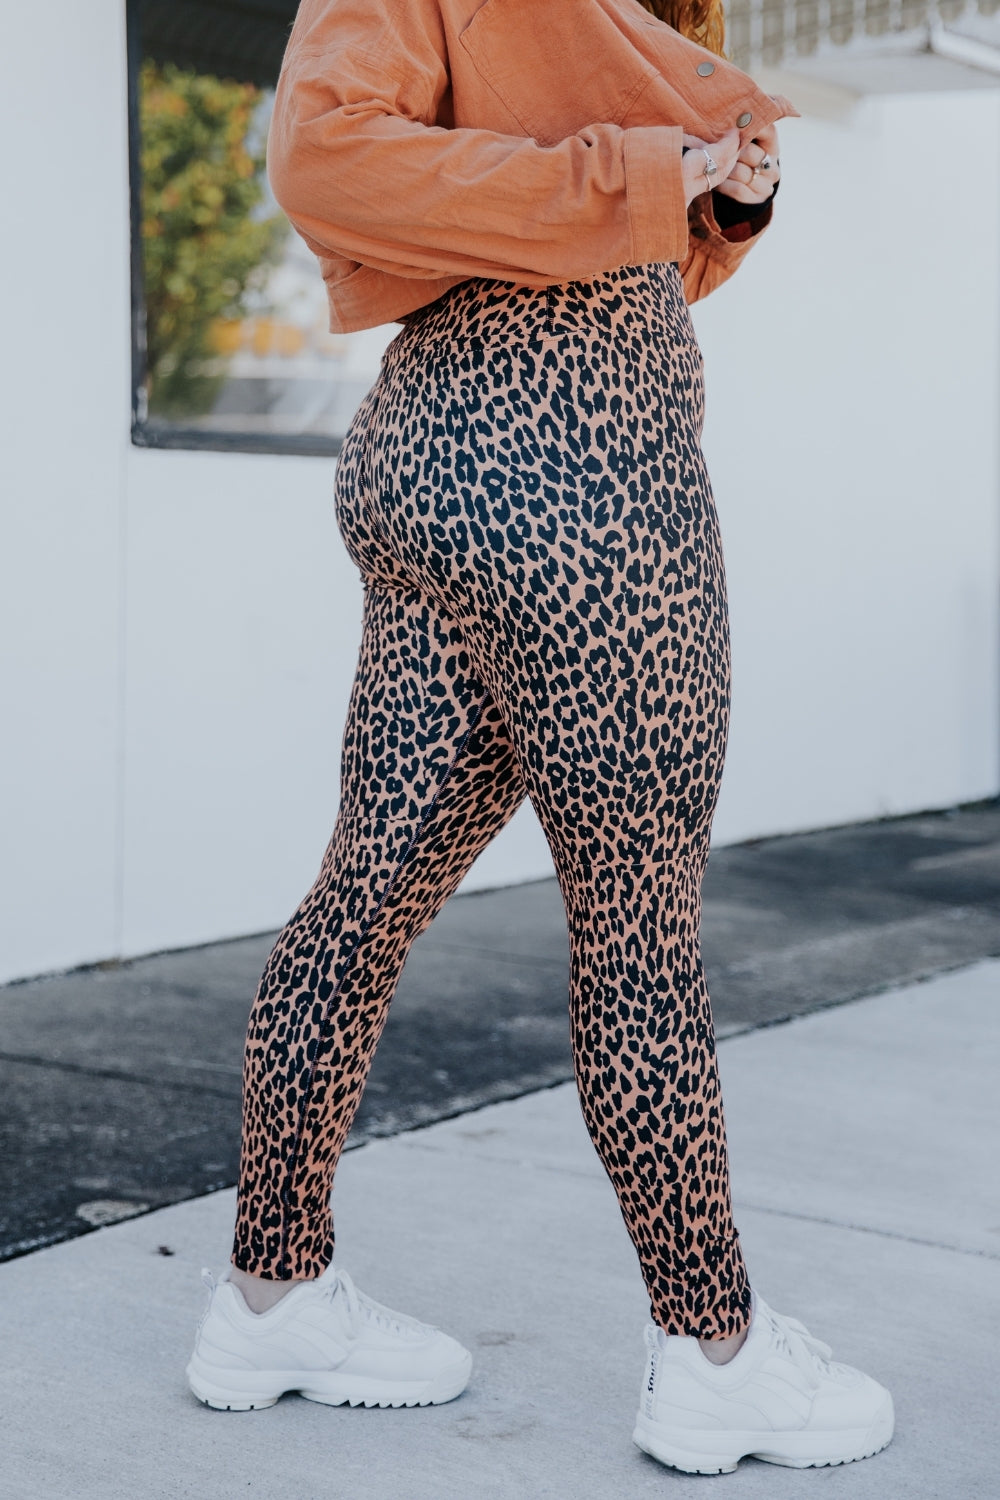 TIYOMI Plus Size Women's Leopard Leggings 2X Full Length Pants